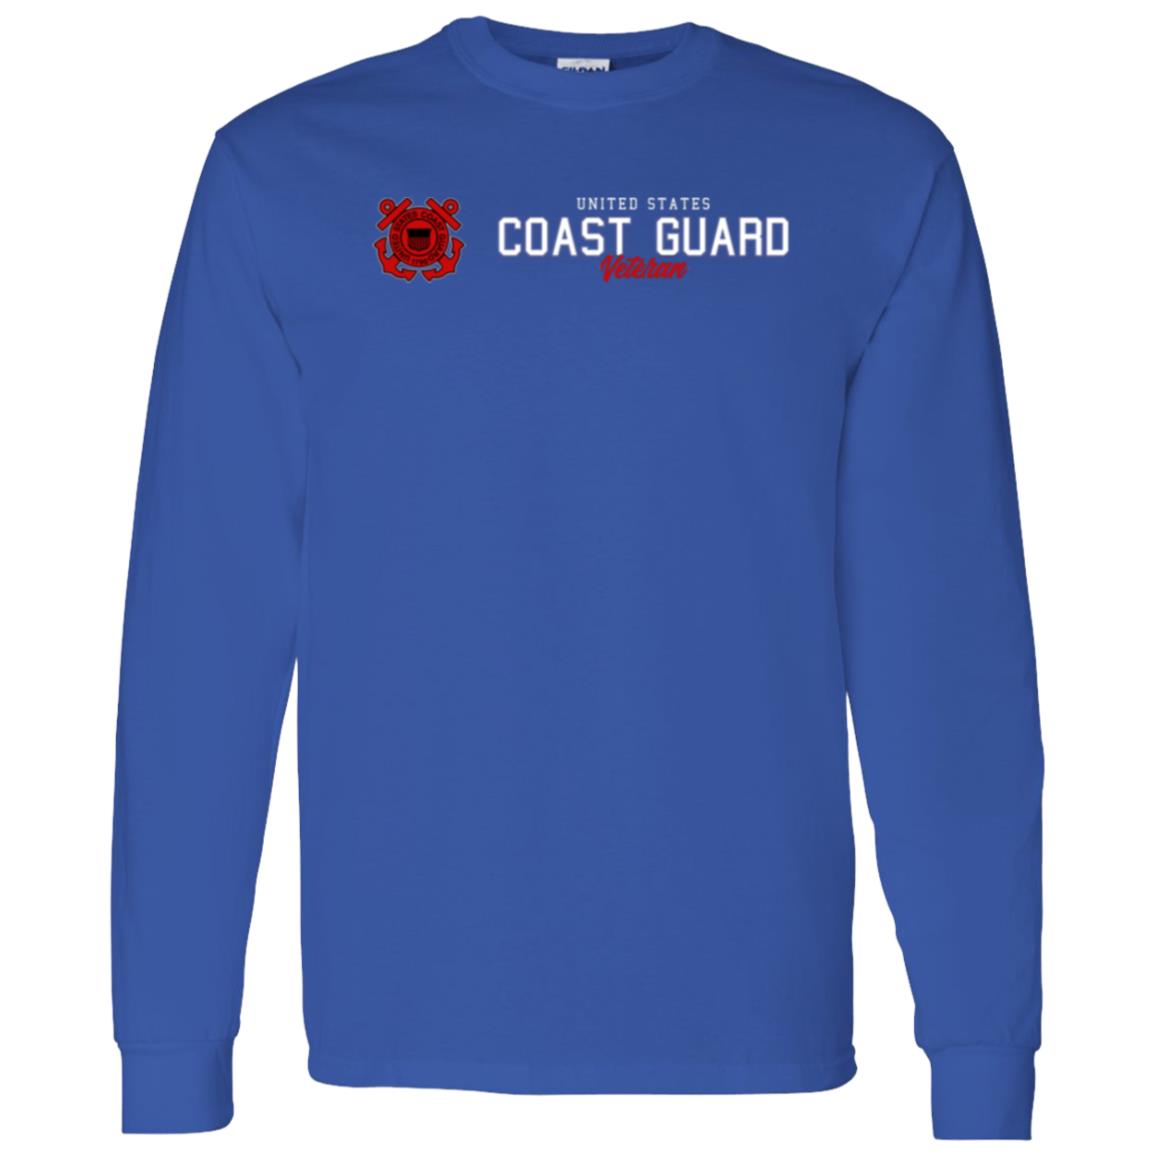 US Coast Guard Veteran Front Shirt